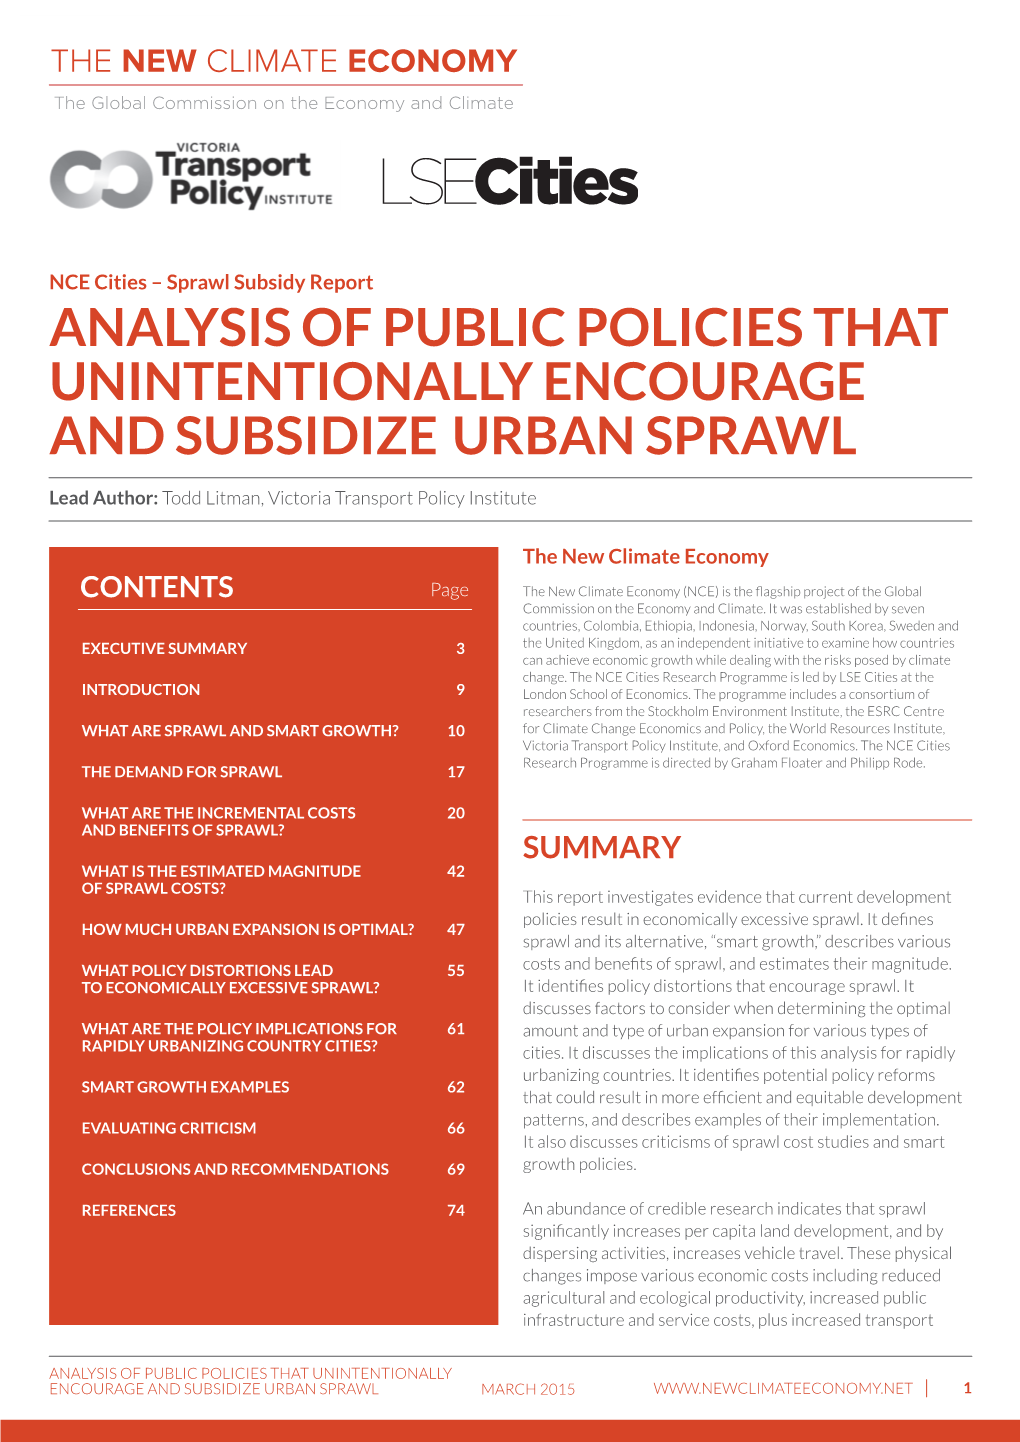 Analysis of Public Policies That Unintentionally Encourage and Subsidize Urban Sprawl